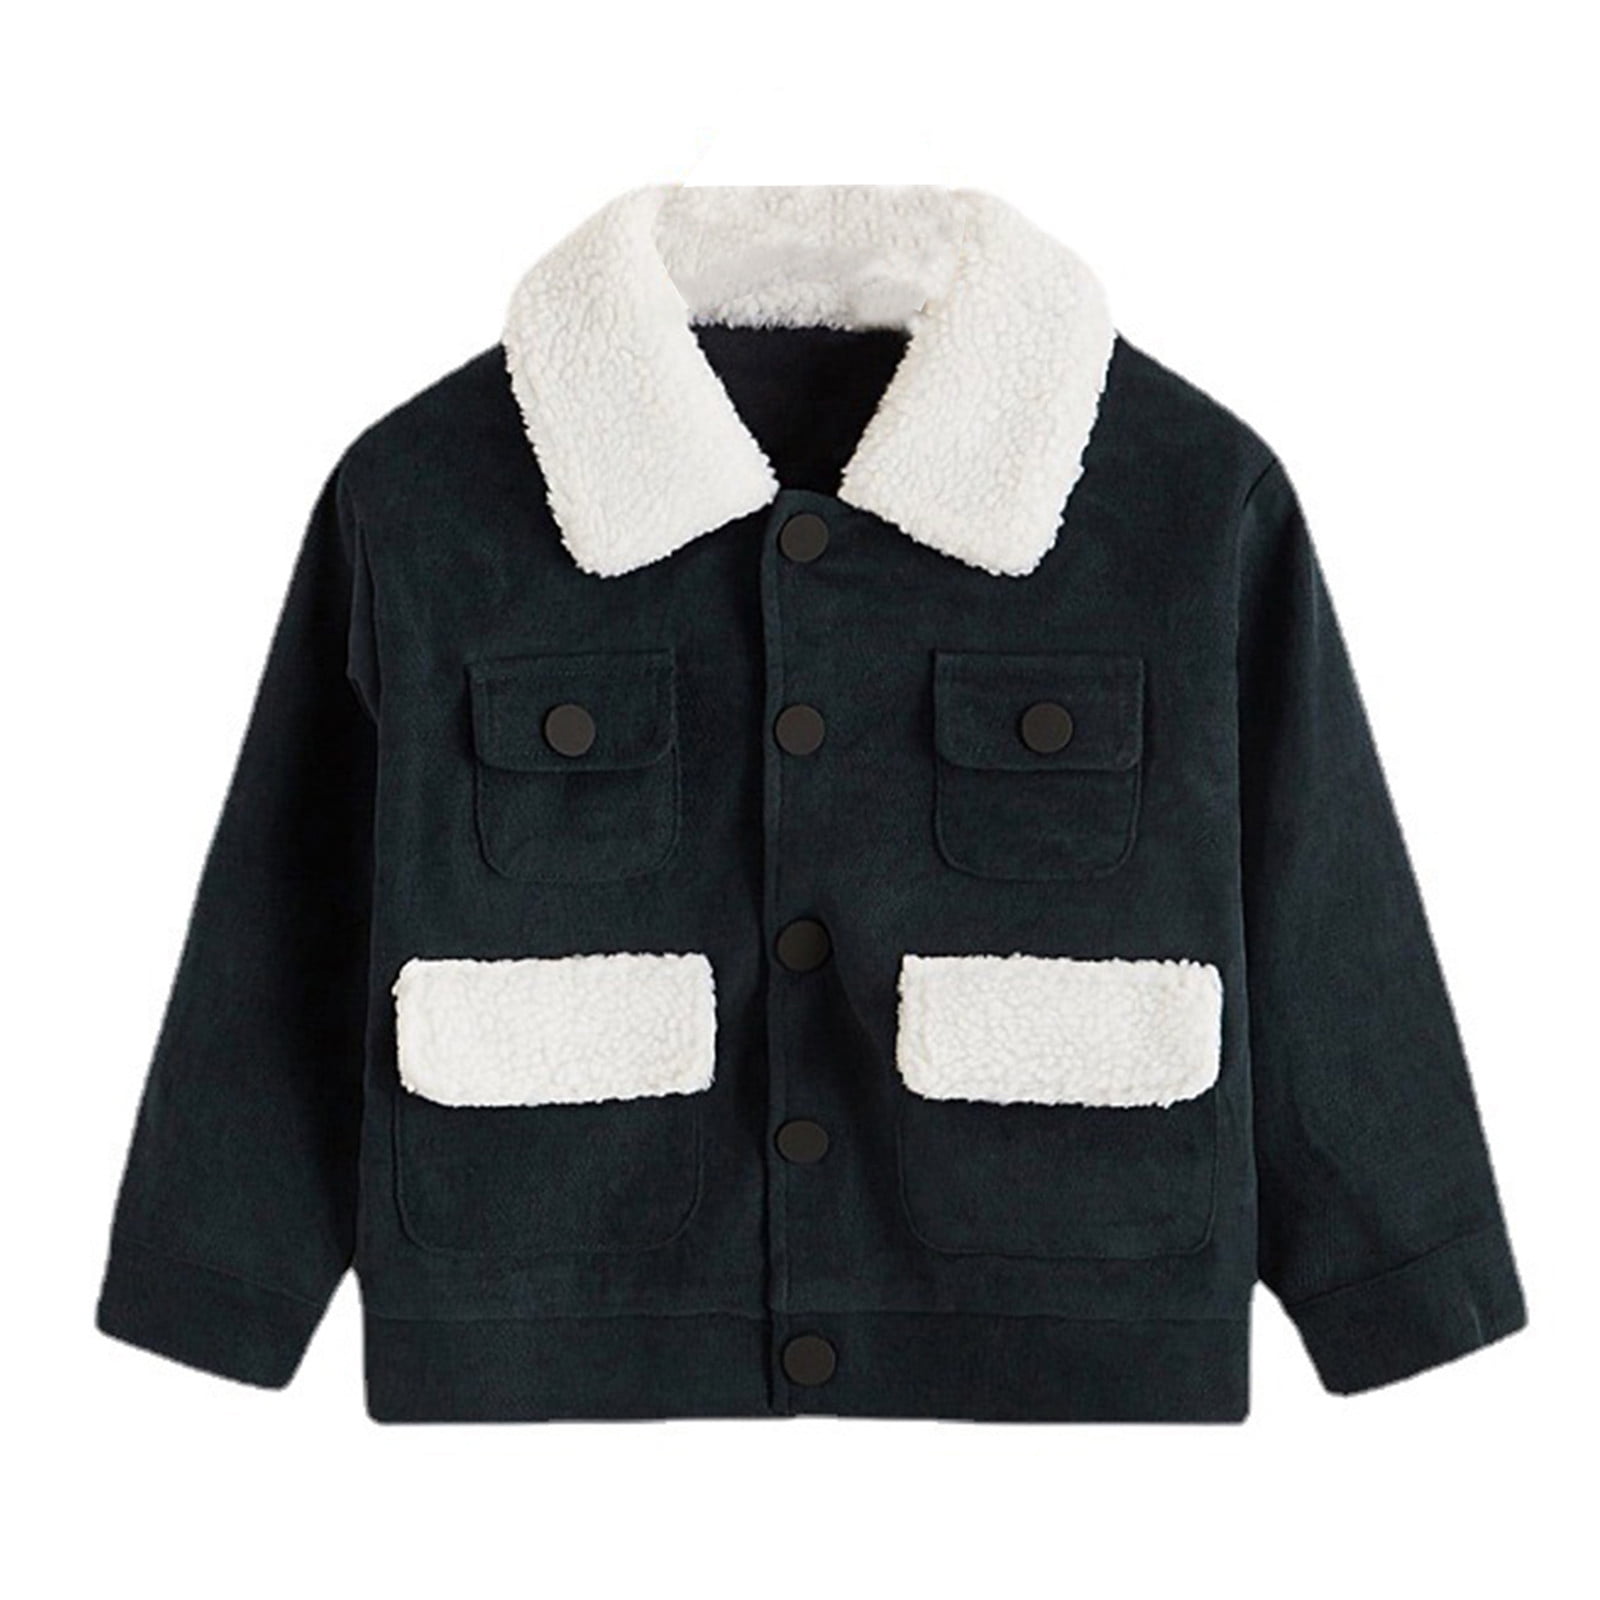 nsendm Coats for Boys 14/16 Long Sleeve Warm Woollen Coat Jacket Solid ...